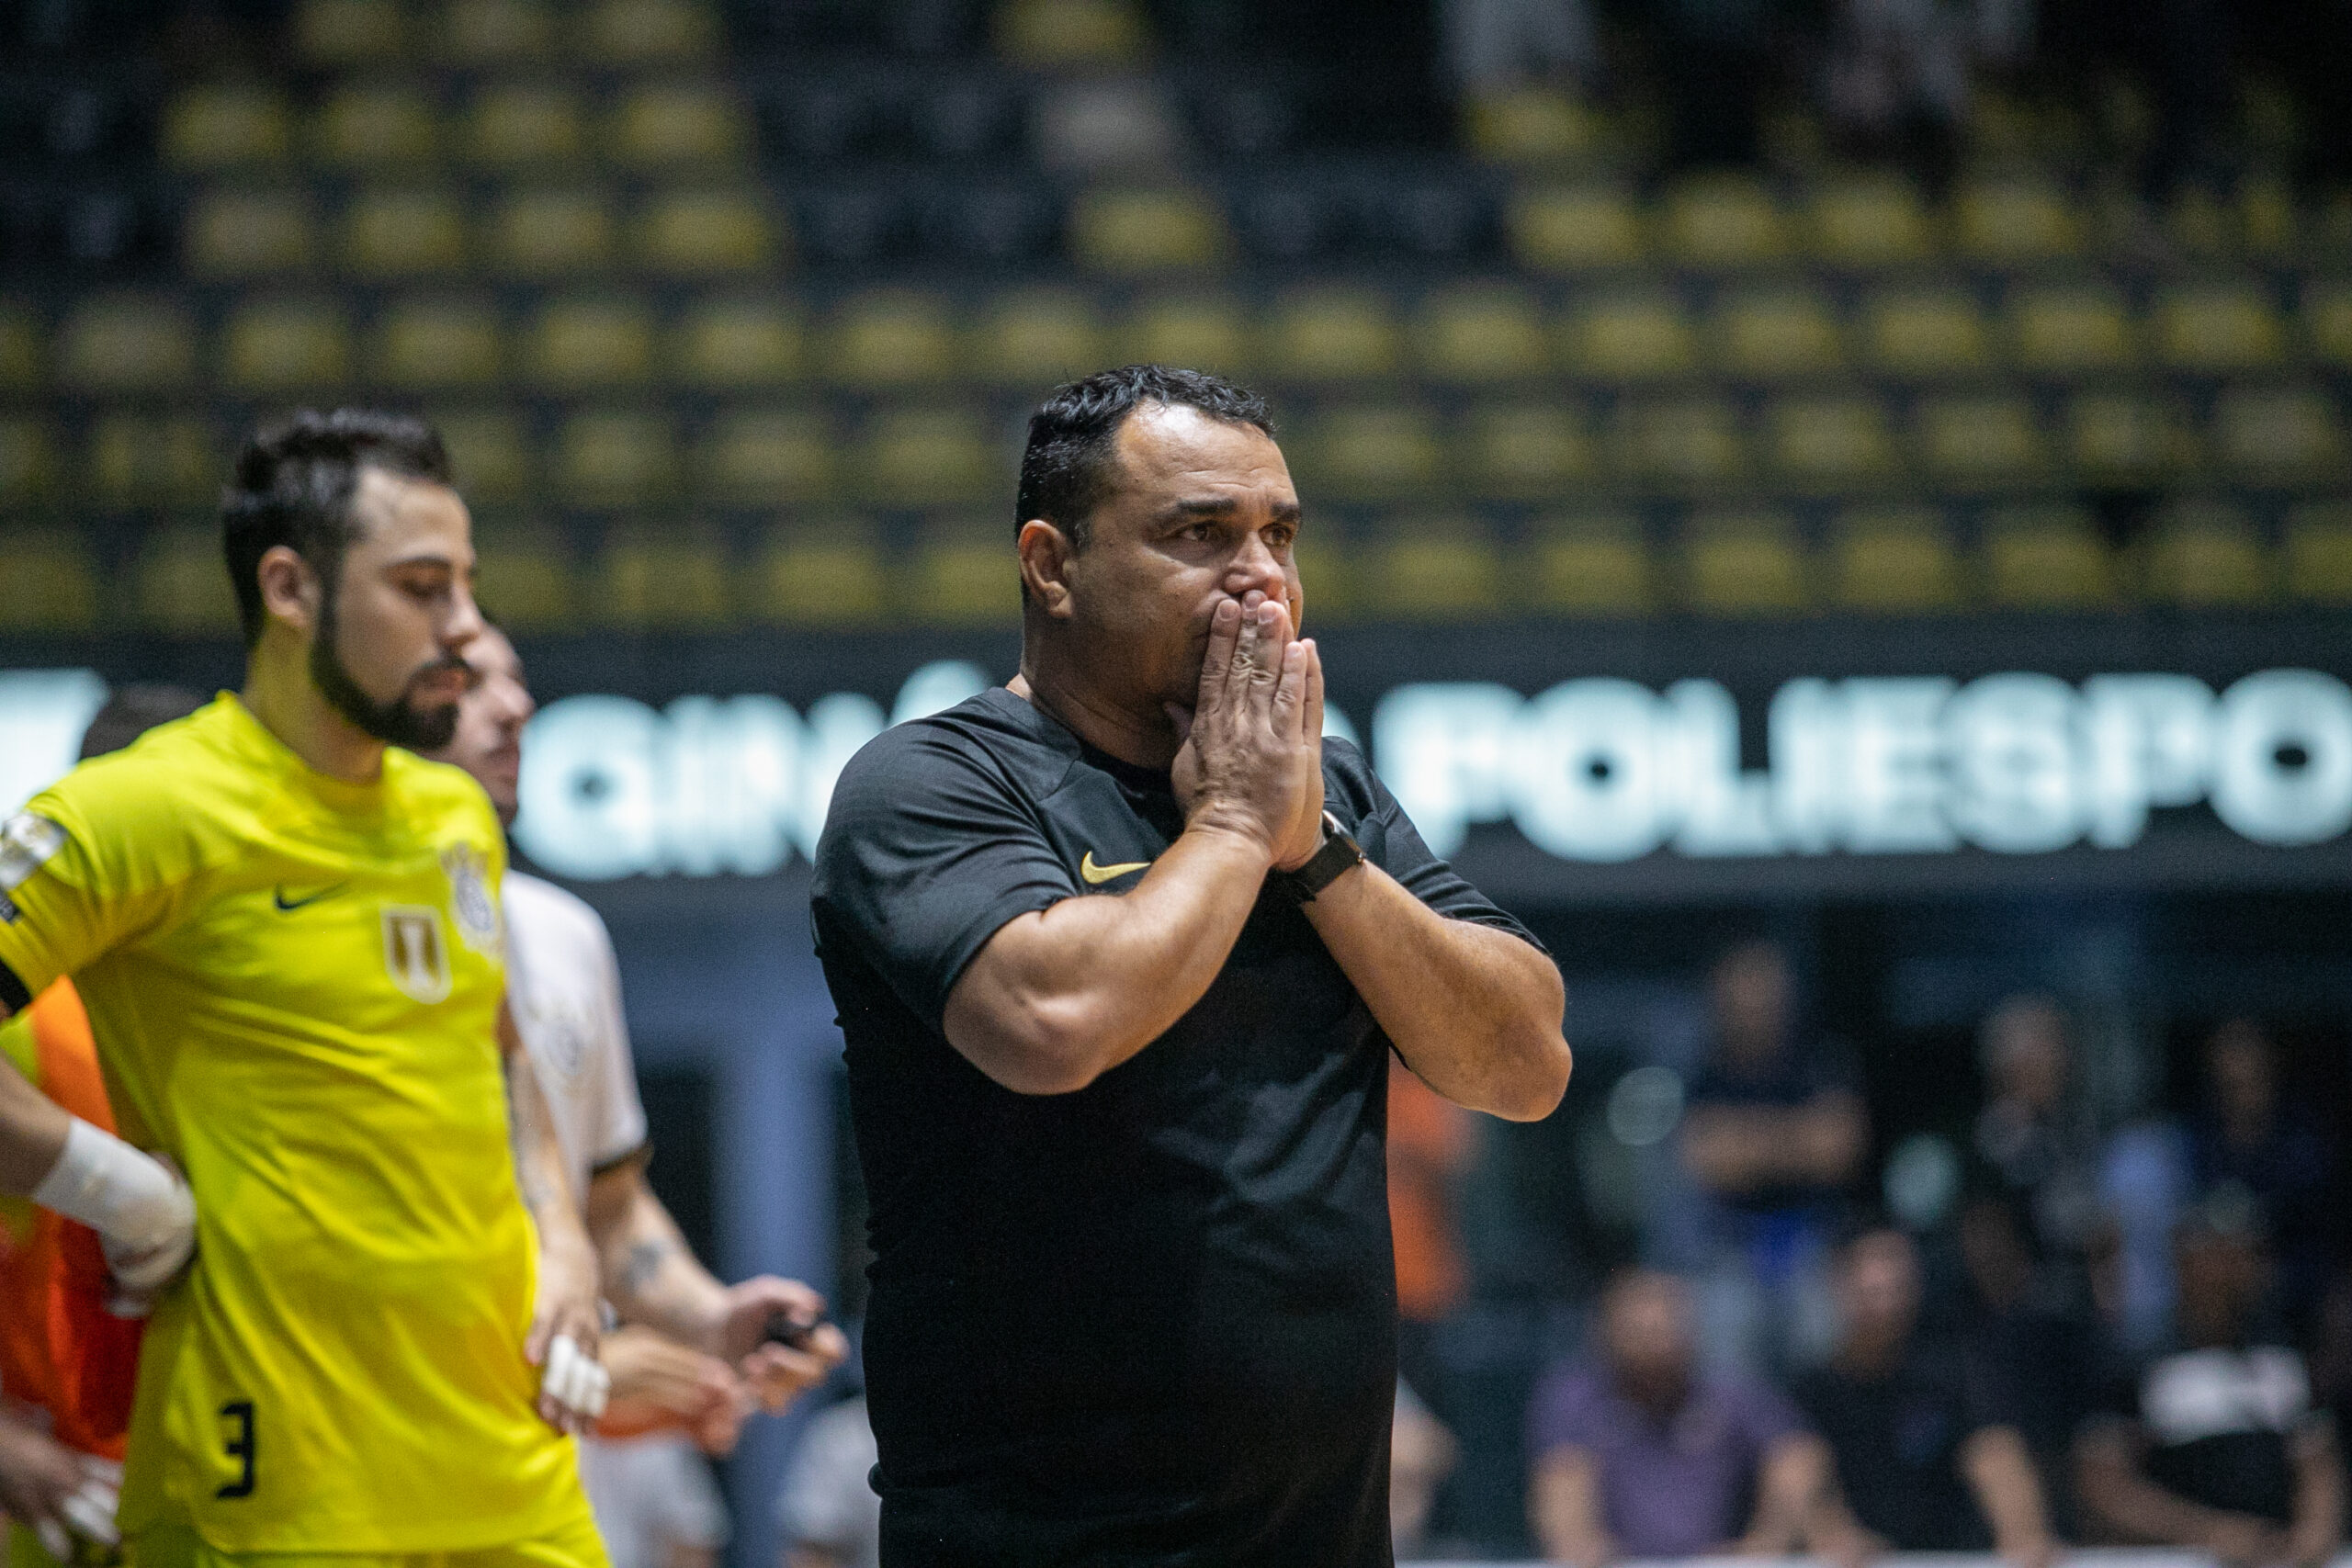 Joinville perde do Barcelona e é vice-campeão da Copa Mundo de Futsal  sub-21, futsal